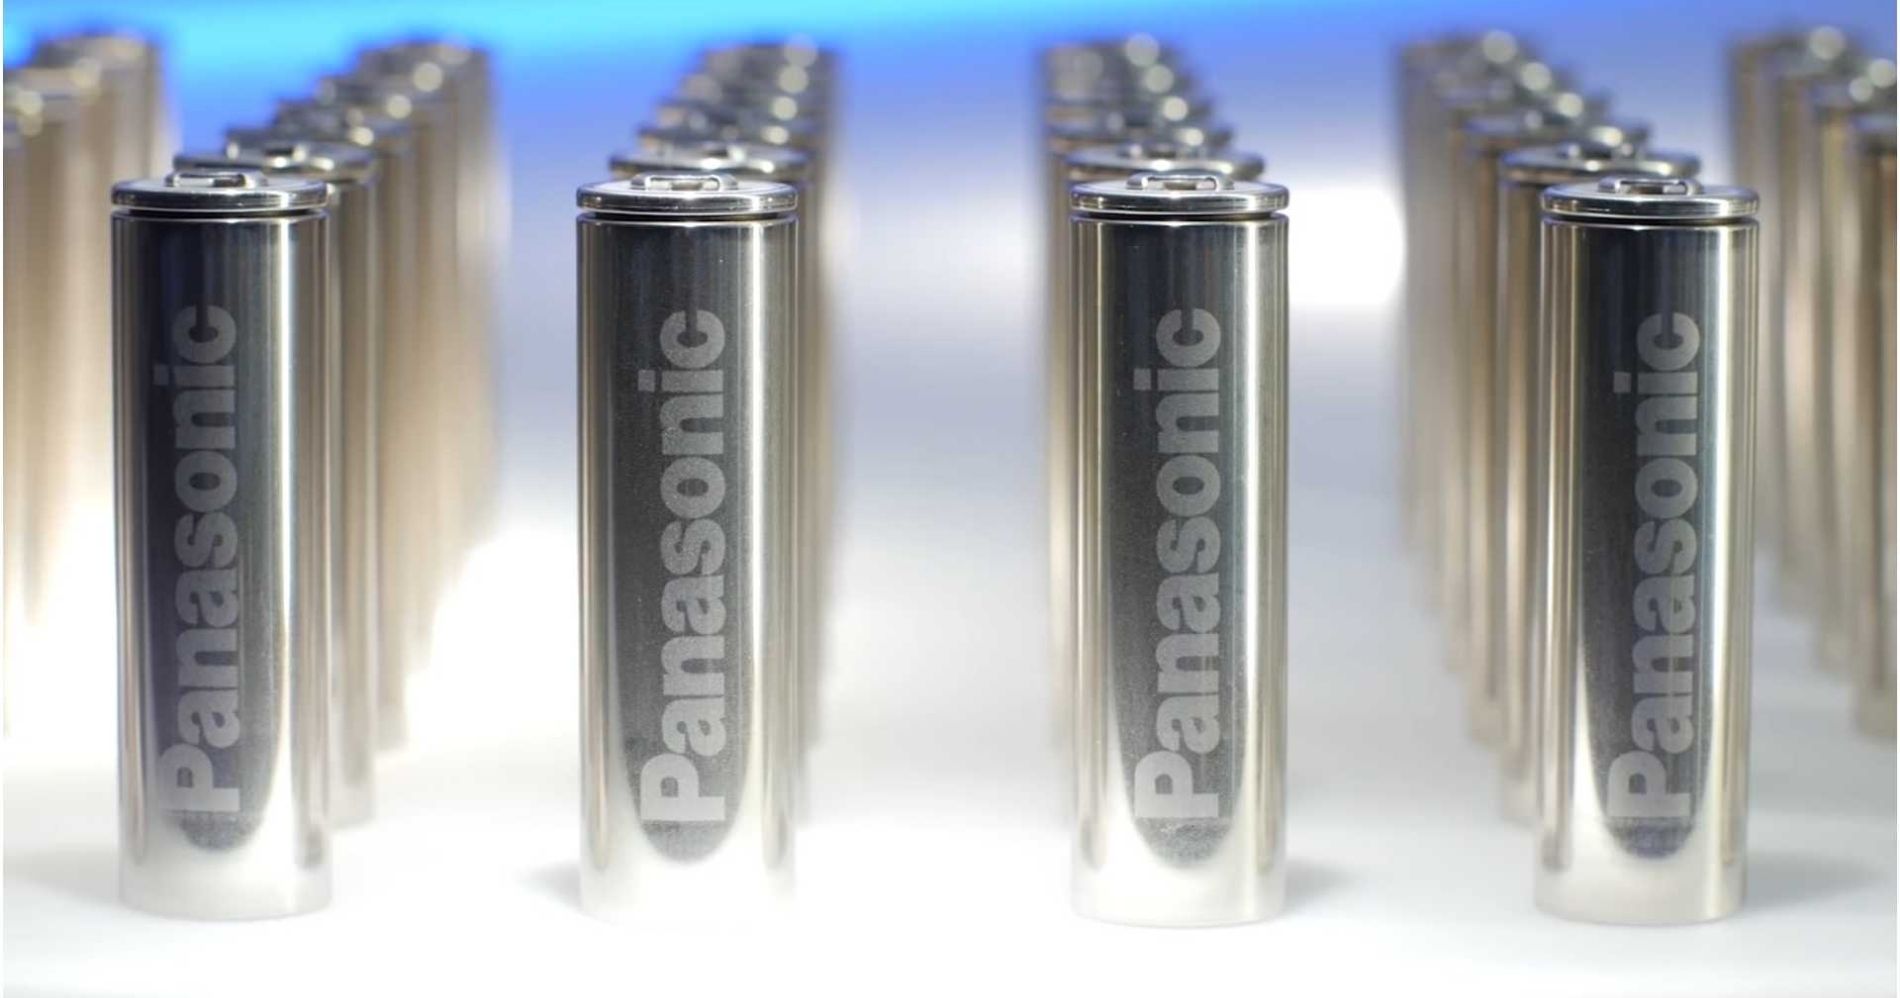 Panasonic Battery Illustration Web Bisnis Muda - Google Images